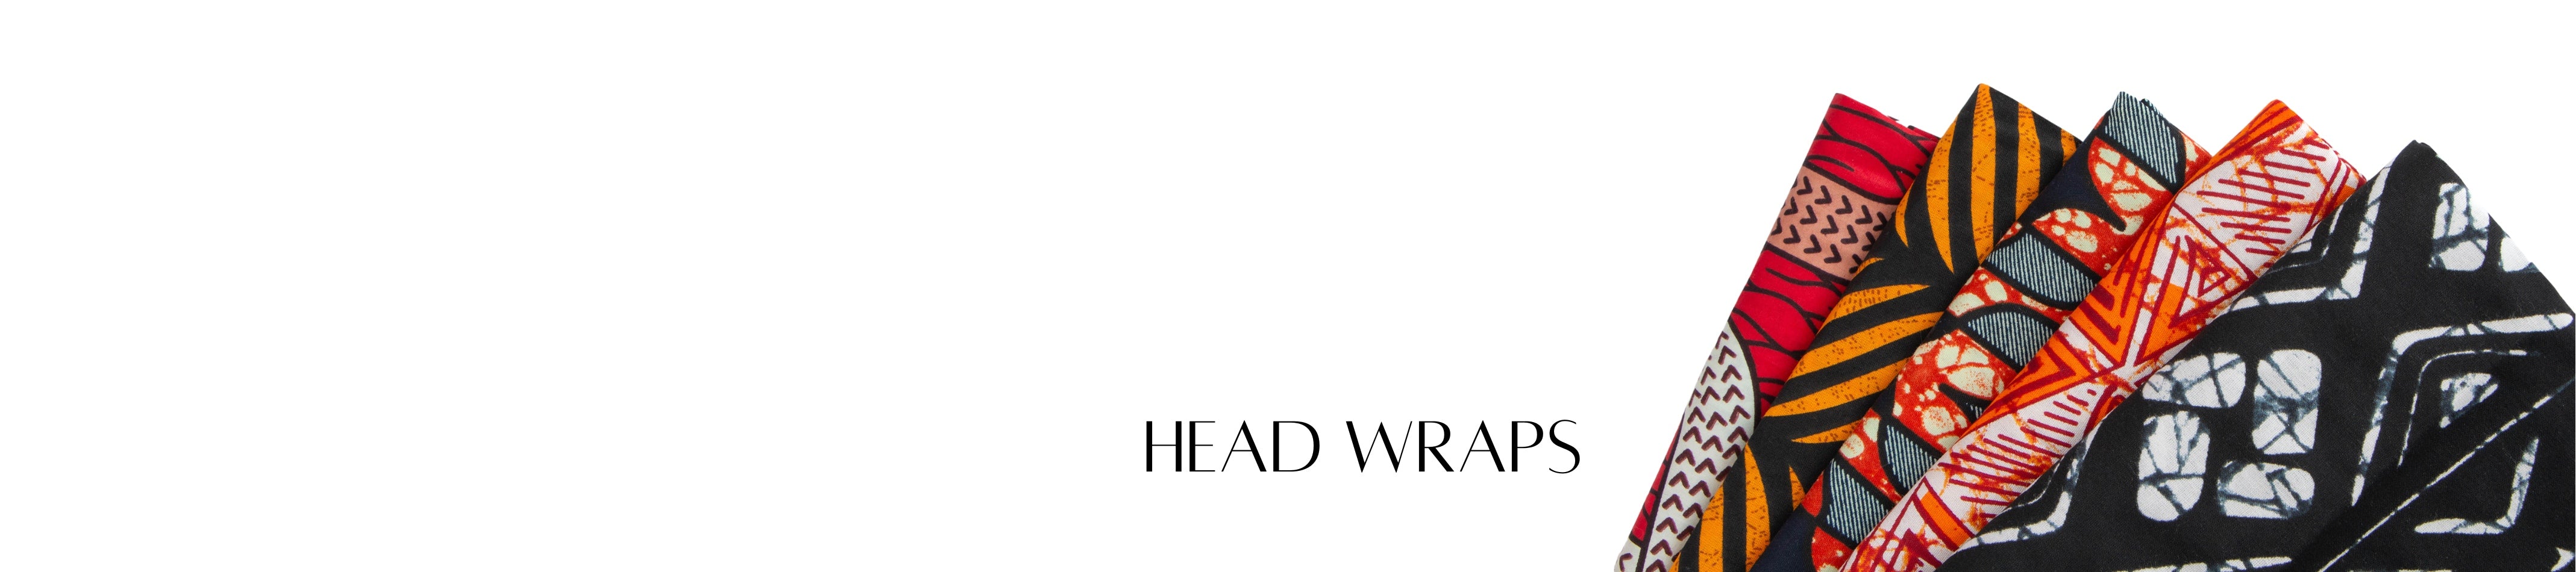 Chen Burkett New York: Cotton Head Wraps collection